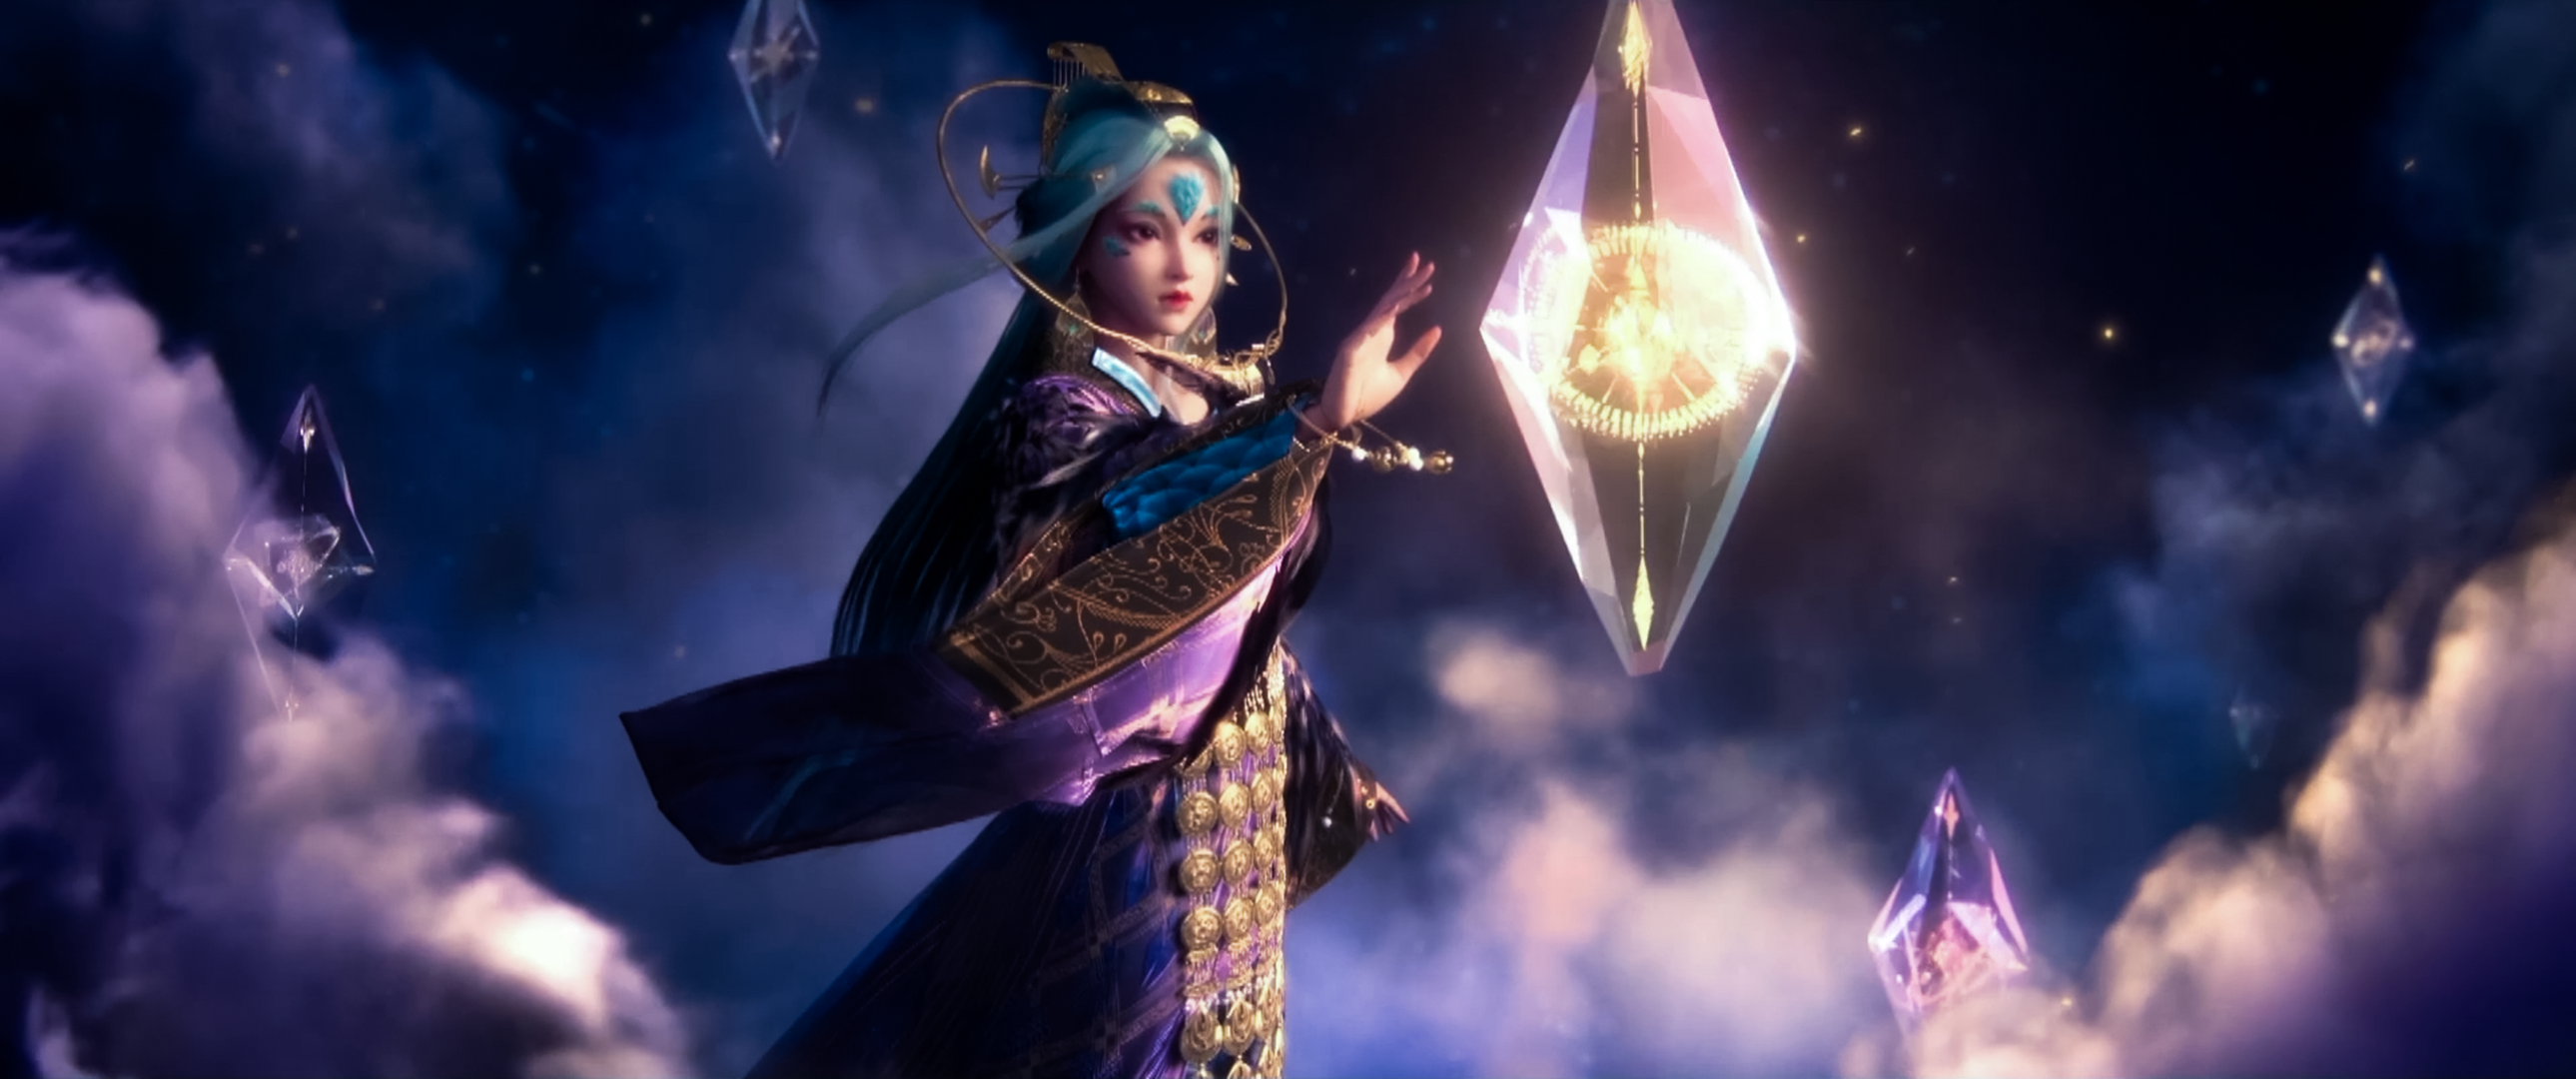 General 2579x1080 Deity Introspection Asian women fantasy art magic fantasy girl standing CGI digital art